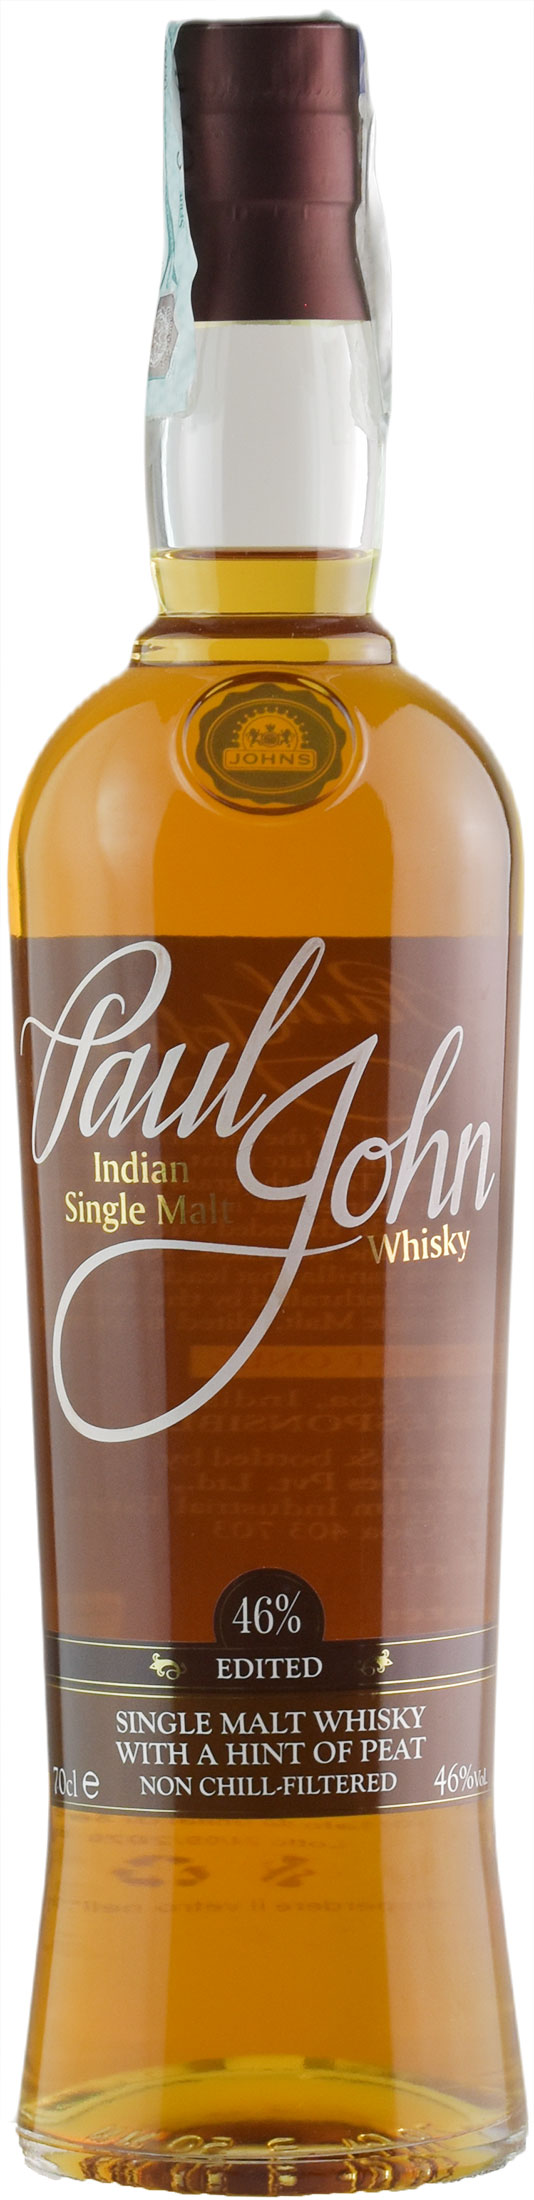 Paul John Indian Single Malt Whisky Edited